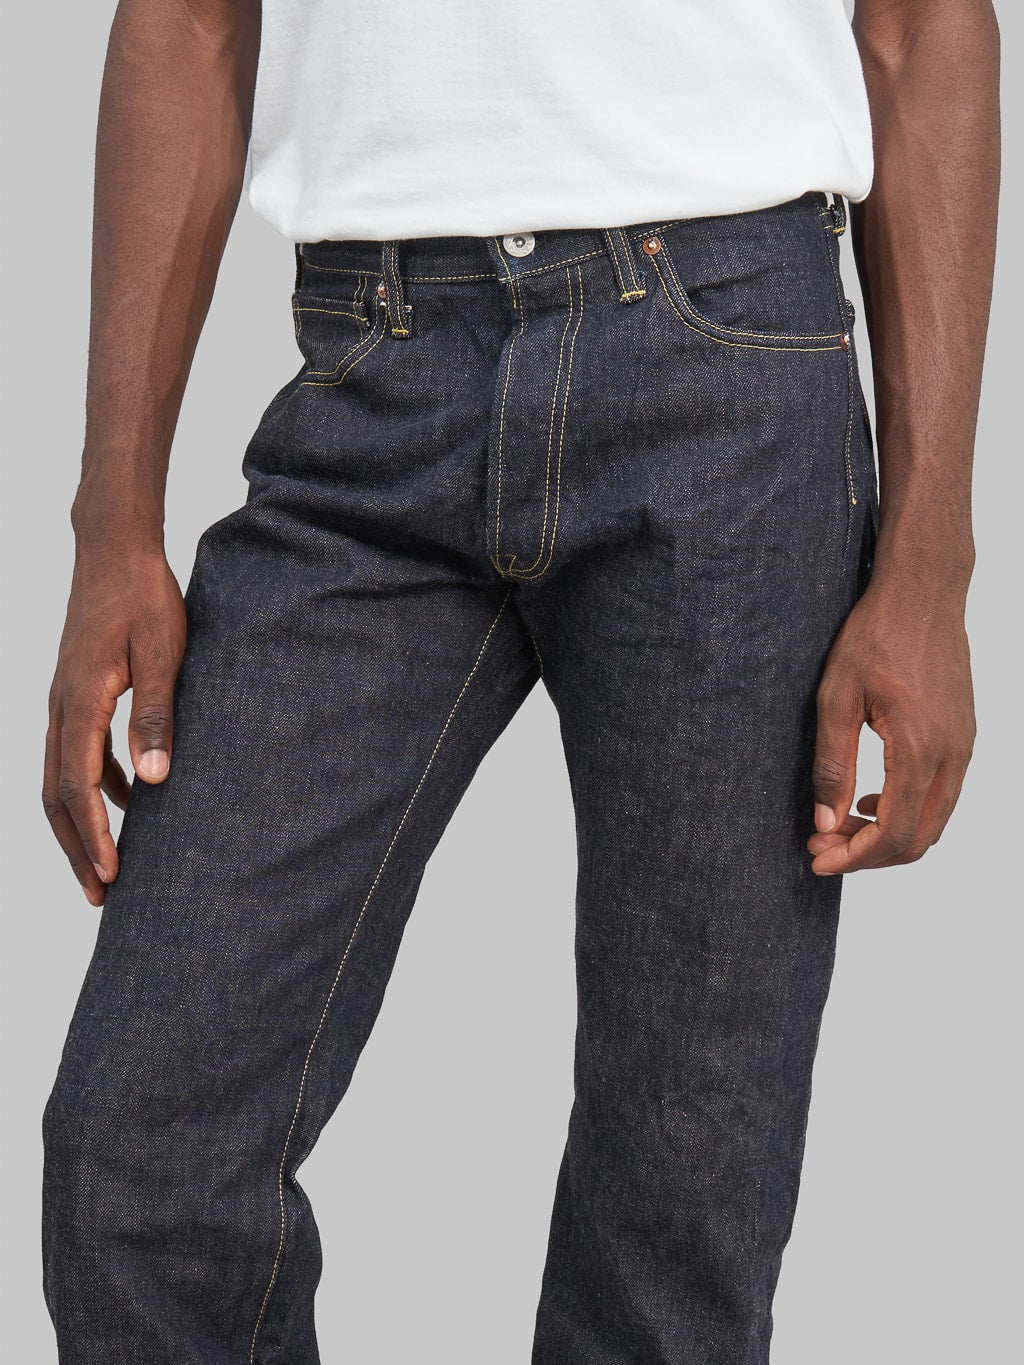 UES 400 WW Post World War Regular Straight Jeans high rise